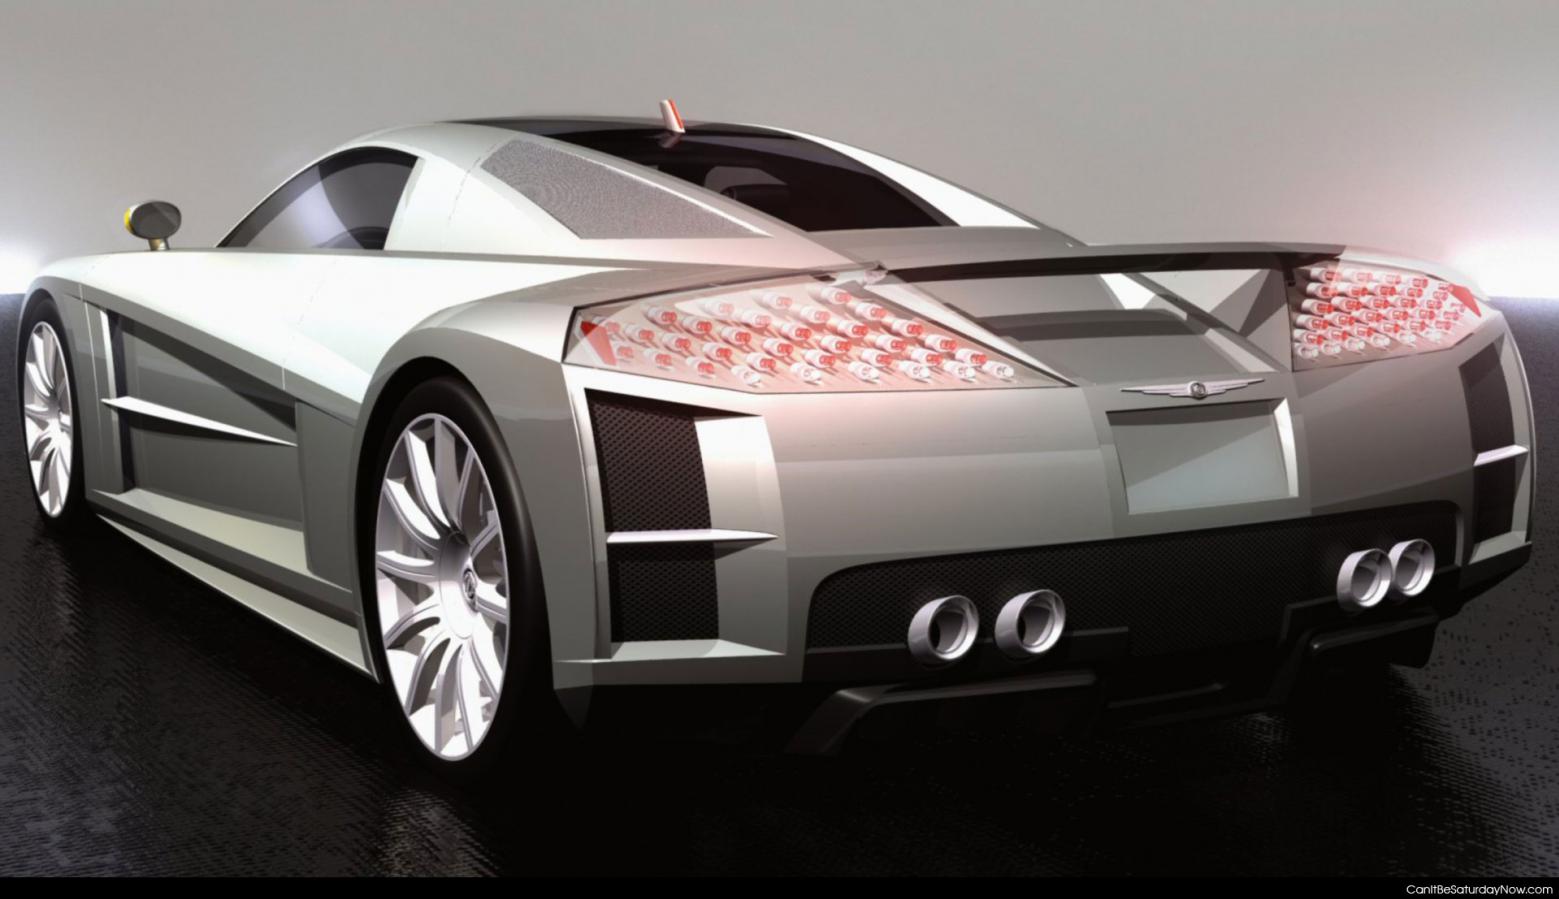 Cgi car butt - cgi rendering of a concept cars rear end